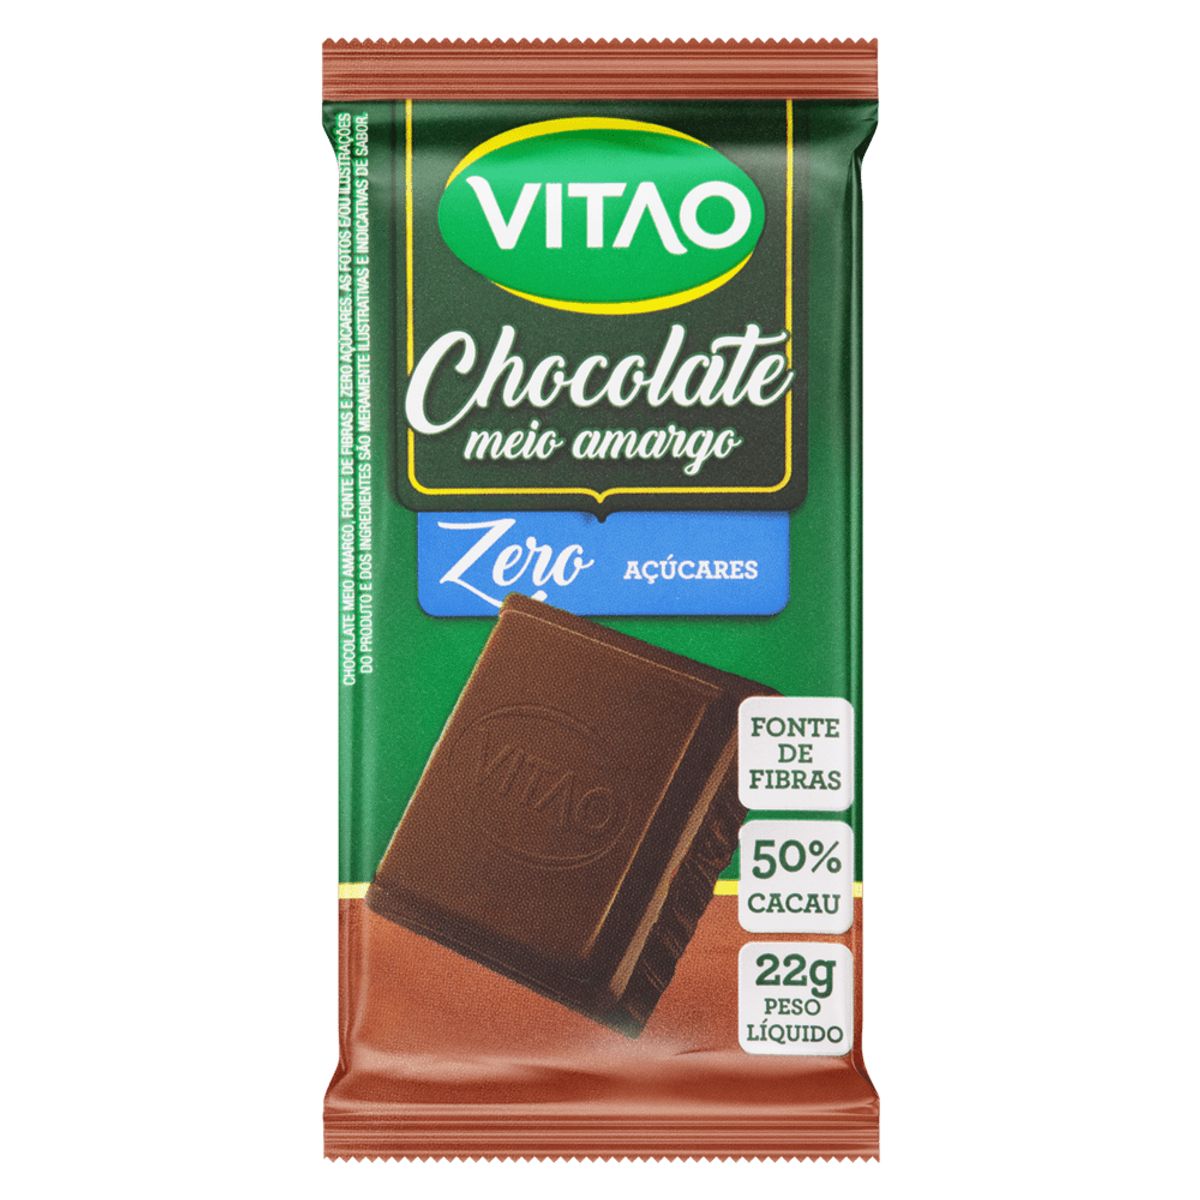 Chocolate Meio Amargo Vitao 50% Cacau Zero Açúcar 22g image number 0